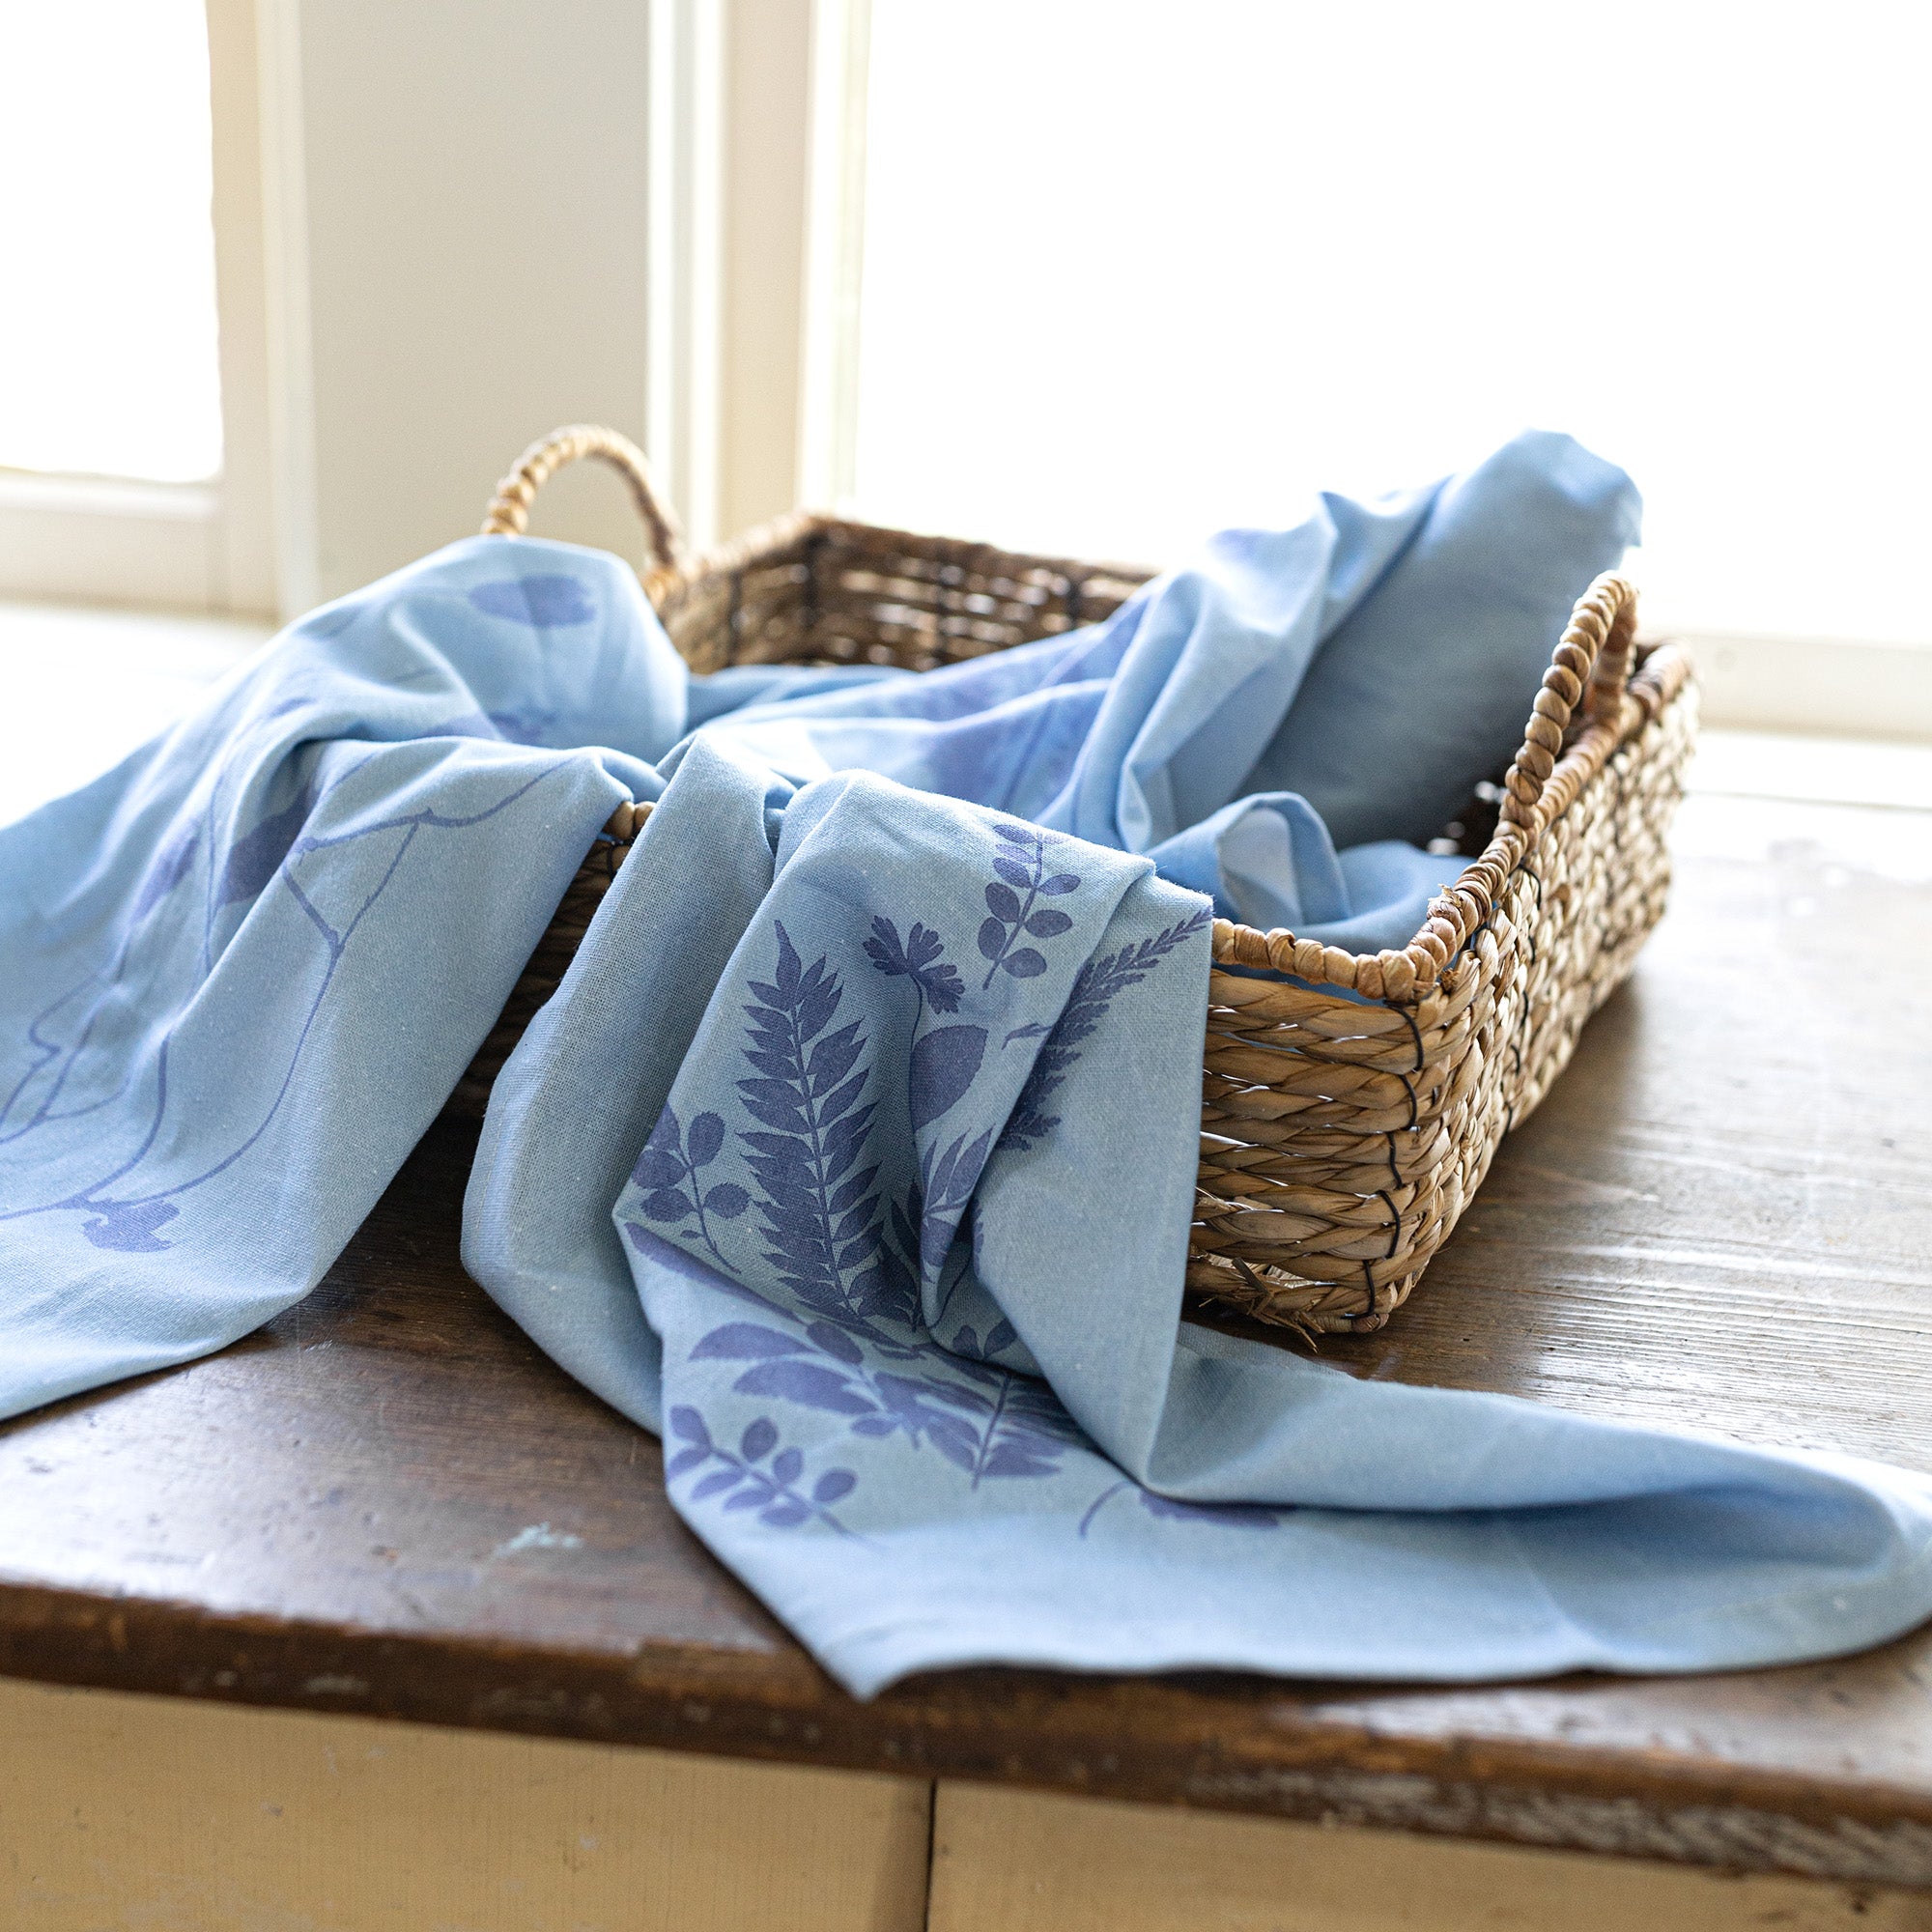 SUN PRINT BOTANICAL TEA TOWELS BLUE, SET OF 3 (MIN2)